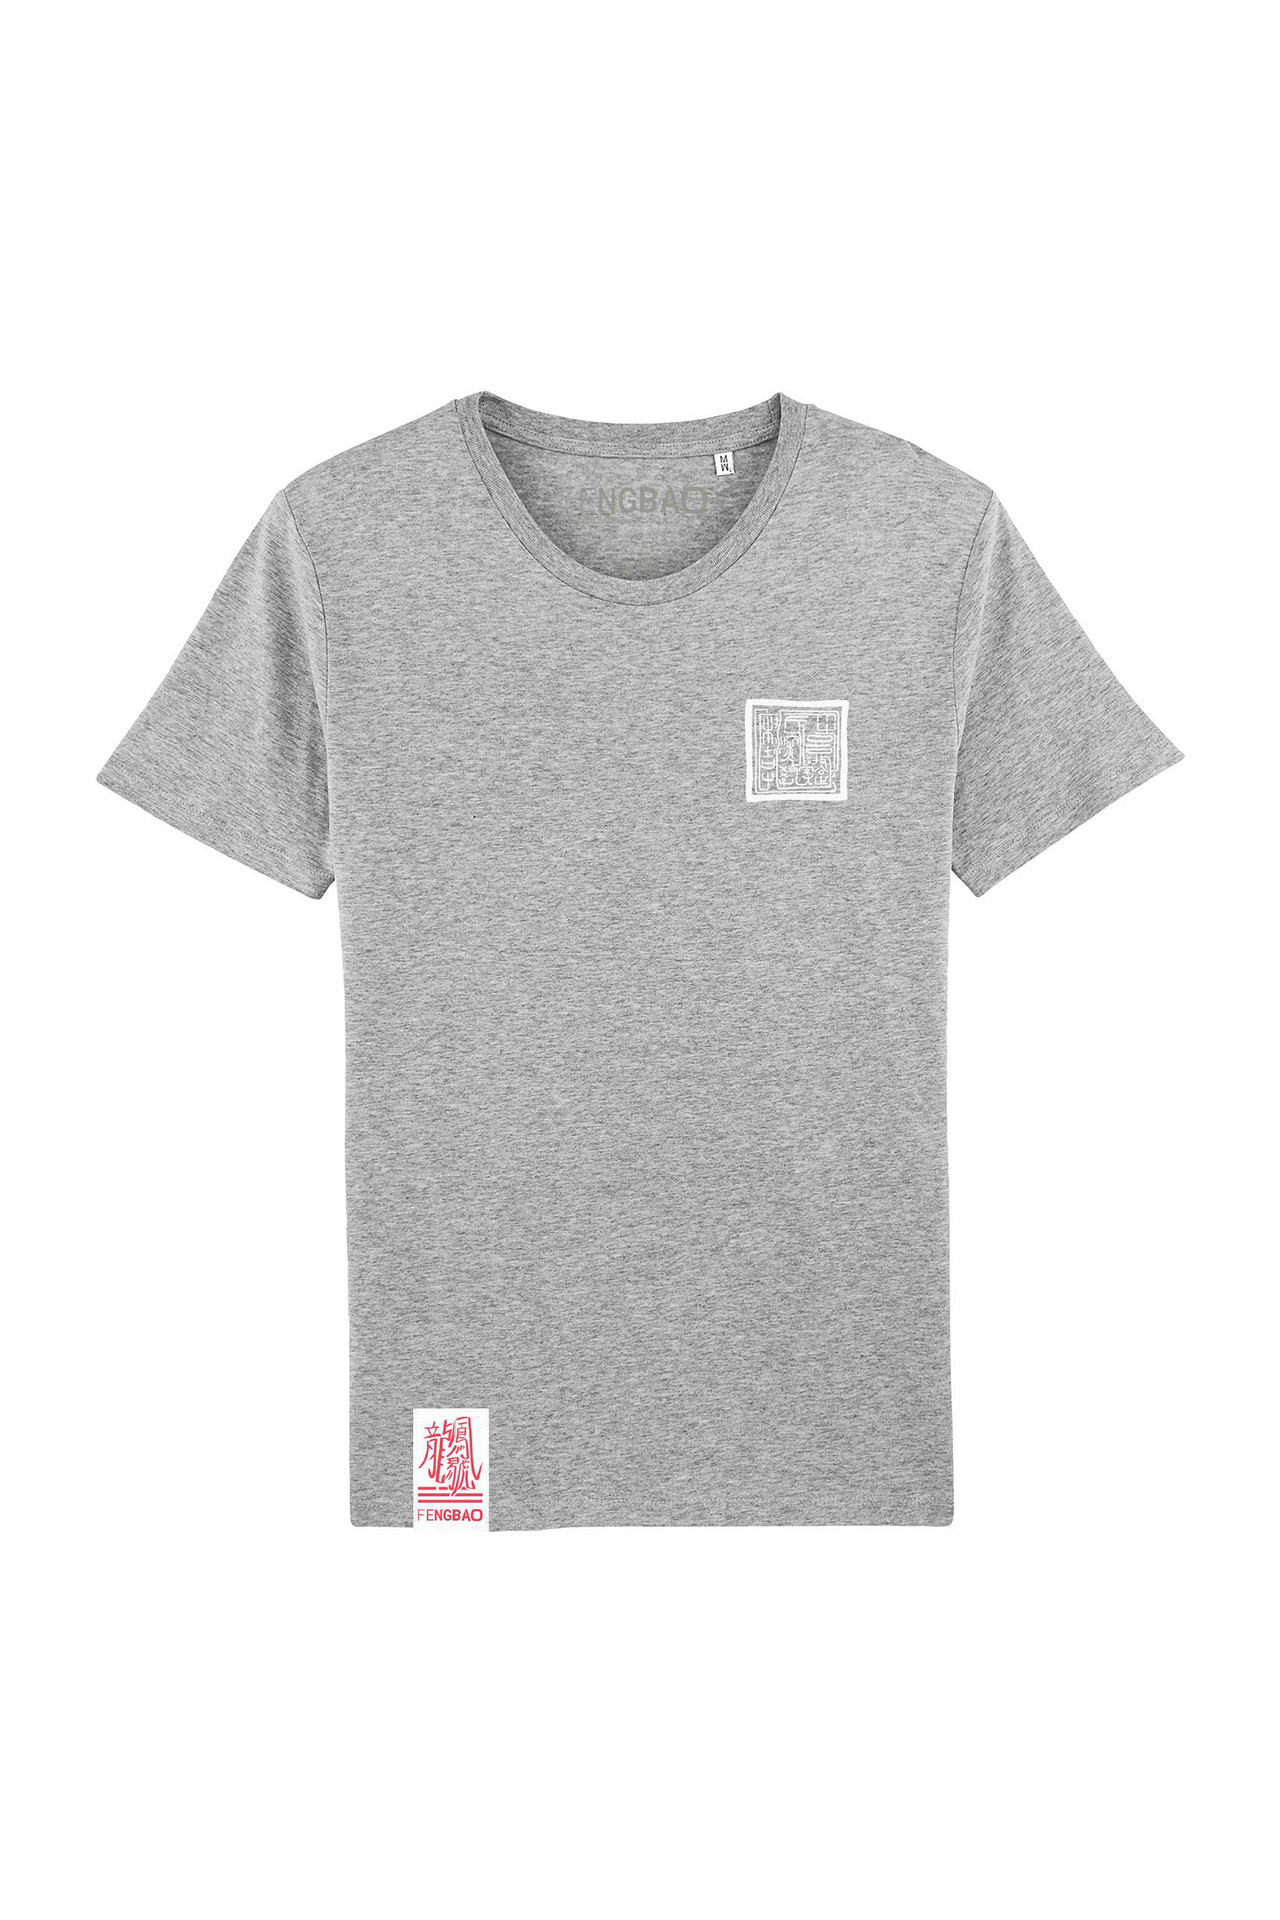 fengbao kung fu shirt boxen shop 1080 essential maenner heather grey vorne